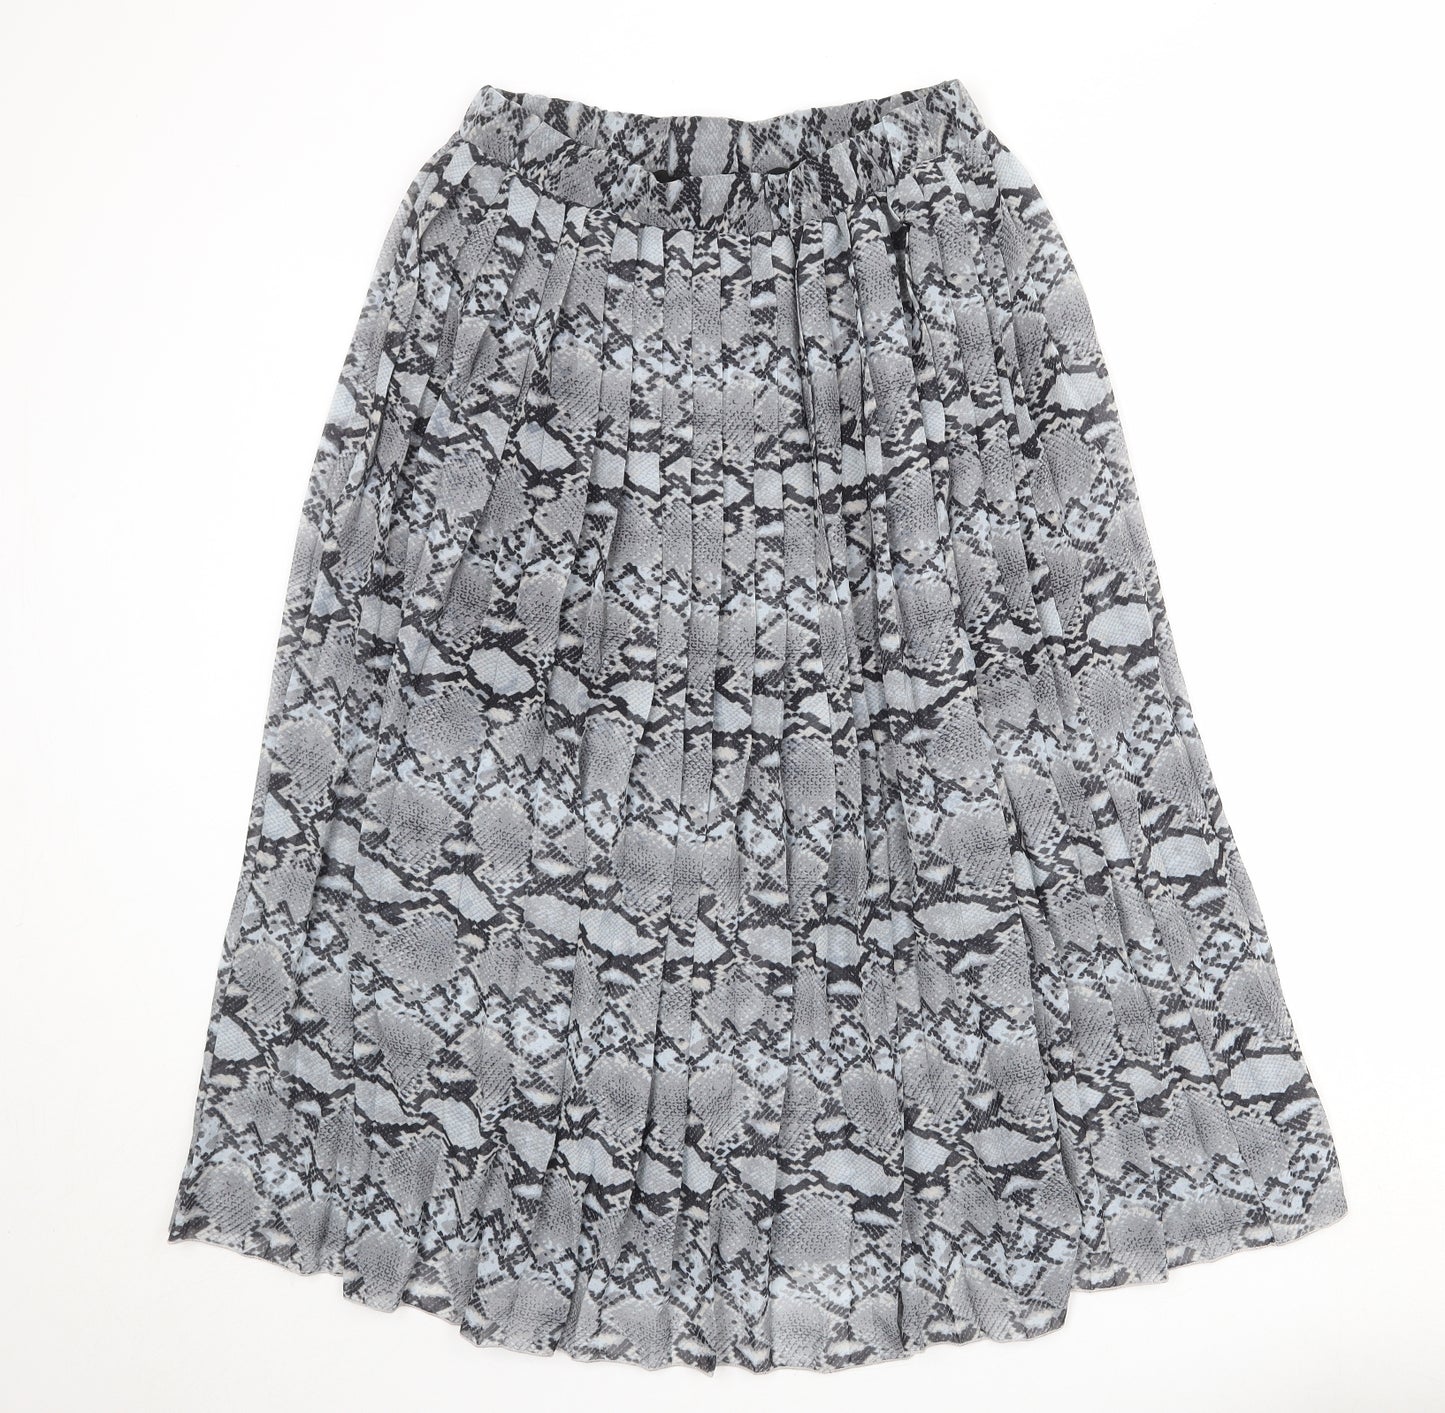 Select Womens Grey Animal Print Polyester Pleated Skirt Size 14 - Snakeskin pattern